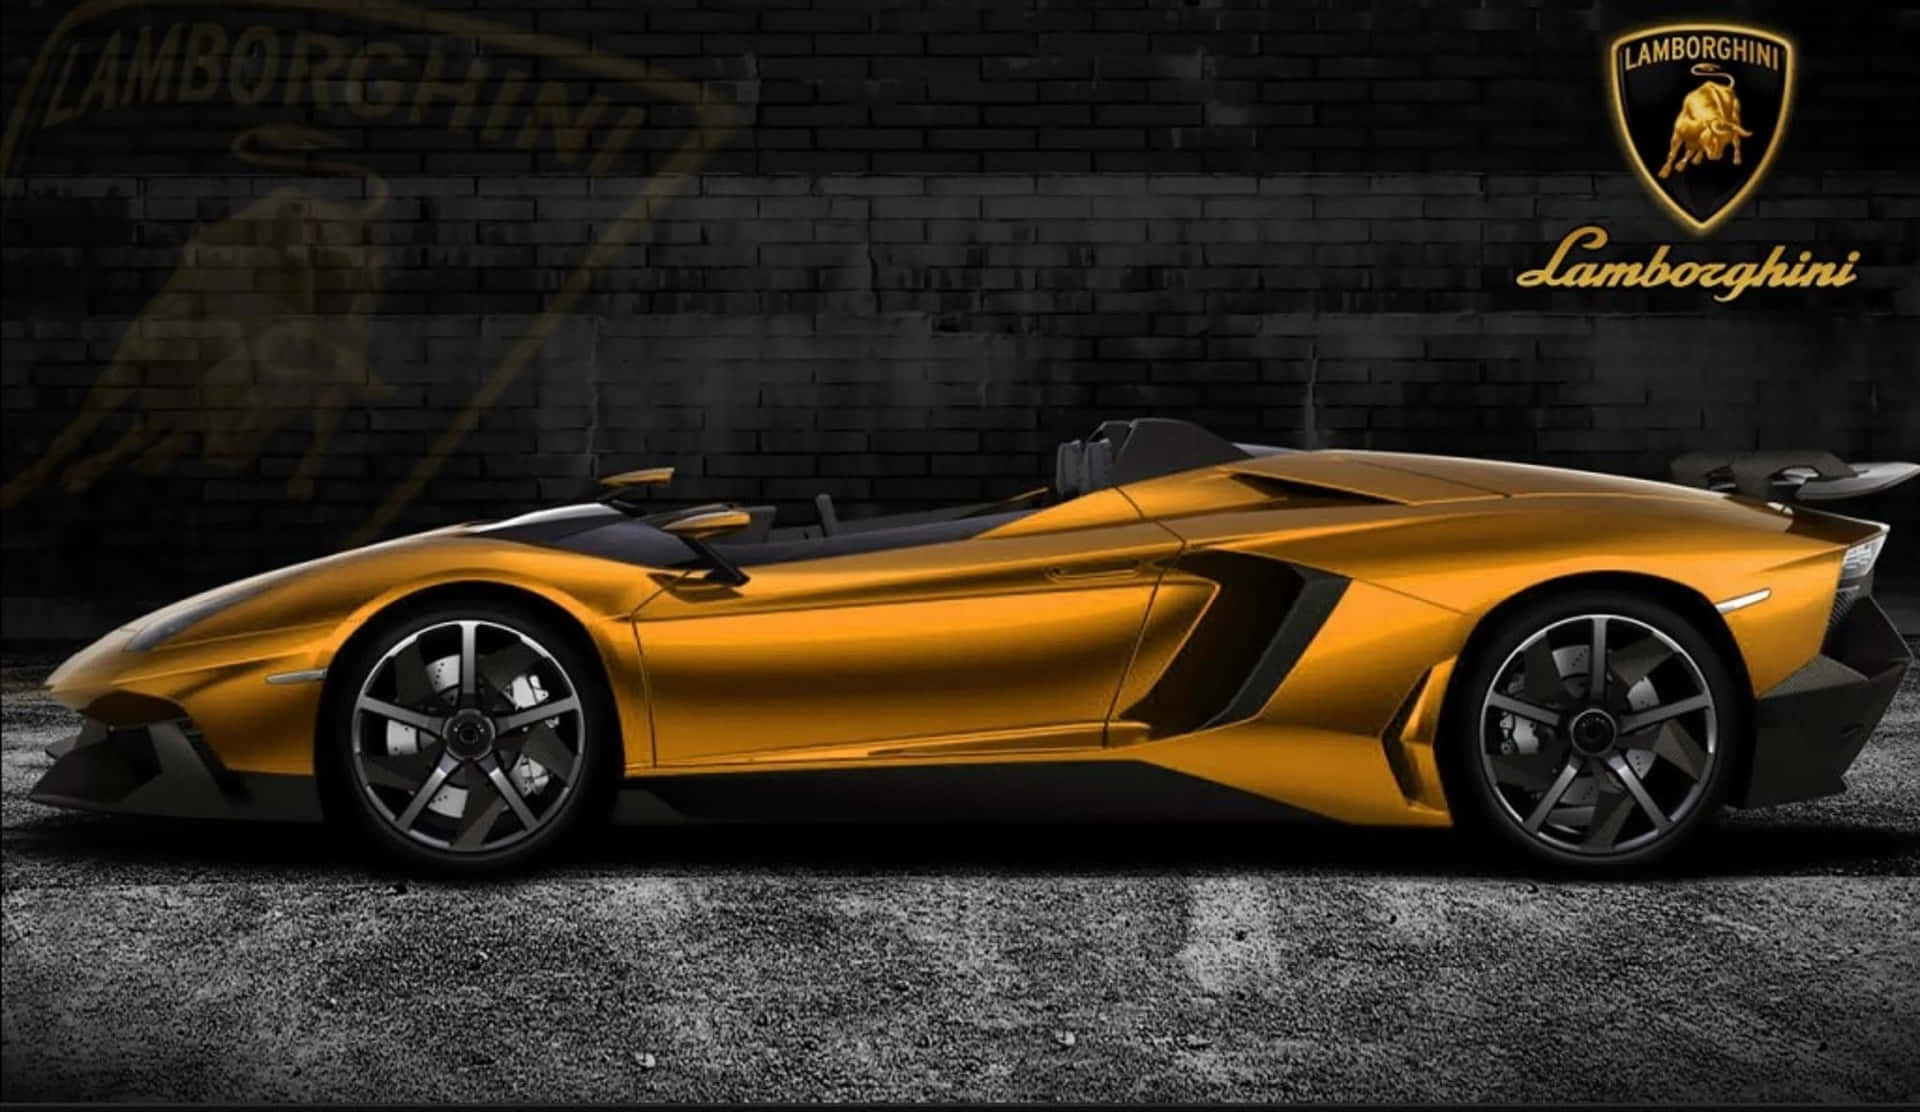 Ponteal Volante Del Lujo Con Un Lamborghini Dorado Fondo de pantalla